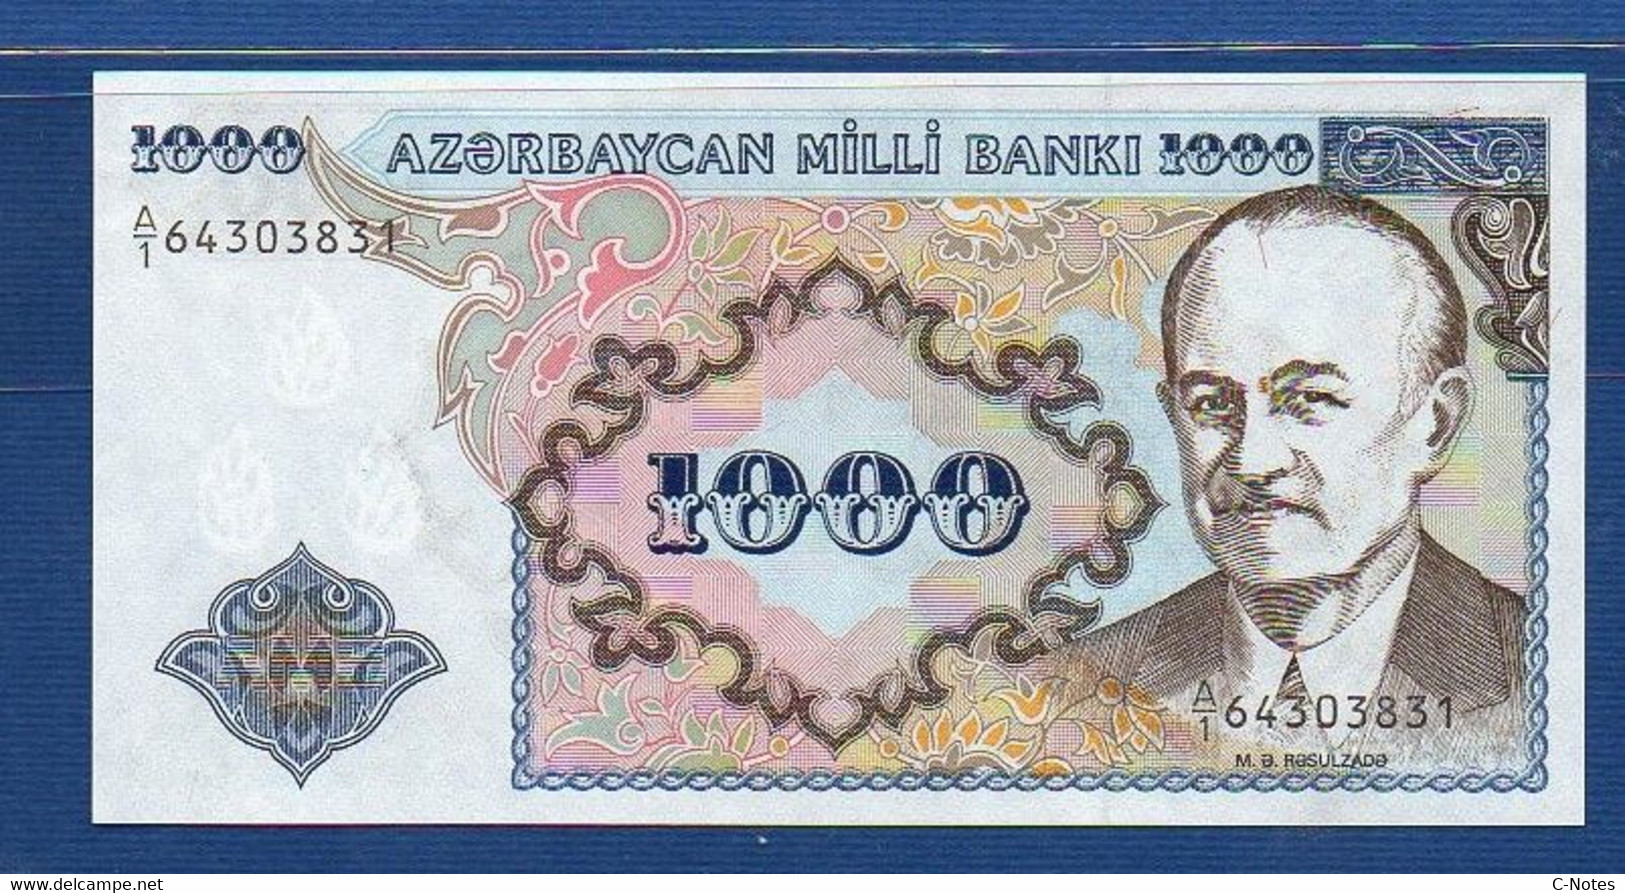 AZERBAIJAN - P.20a - 1000 1.000 MANAT ND (1993) UNC, Serie A/1 64303831 - Azerbaïdjan